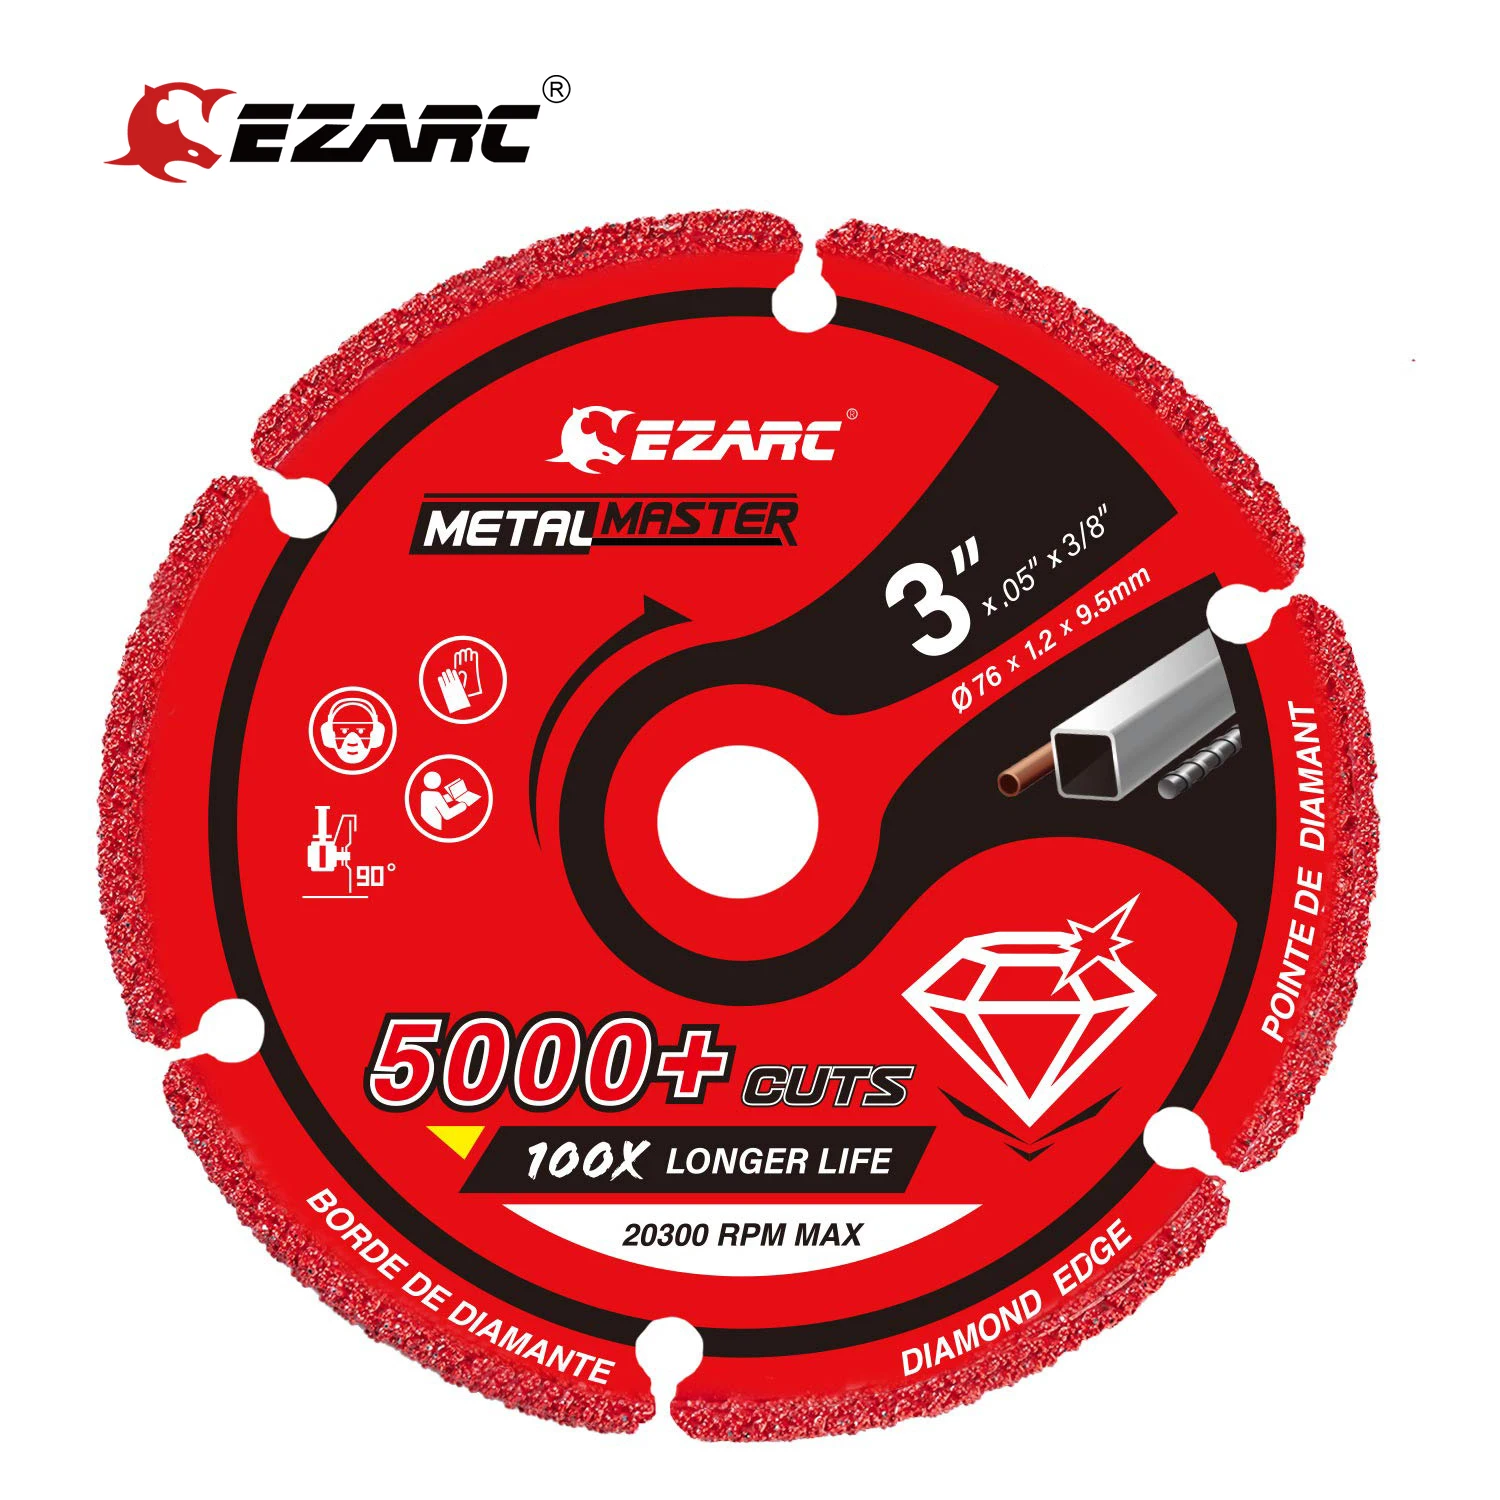 Ezarc diamond cutting wheel 76mm x 9 5mm for metal cut off wheel with 5000 cuts thumb200